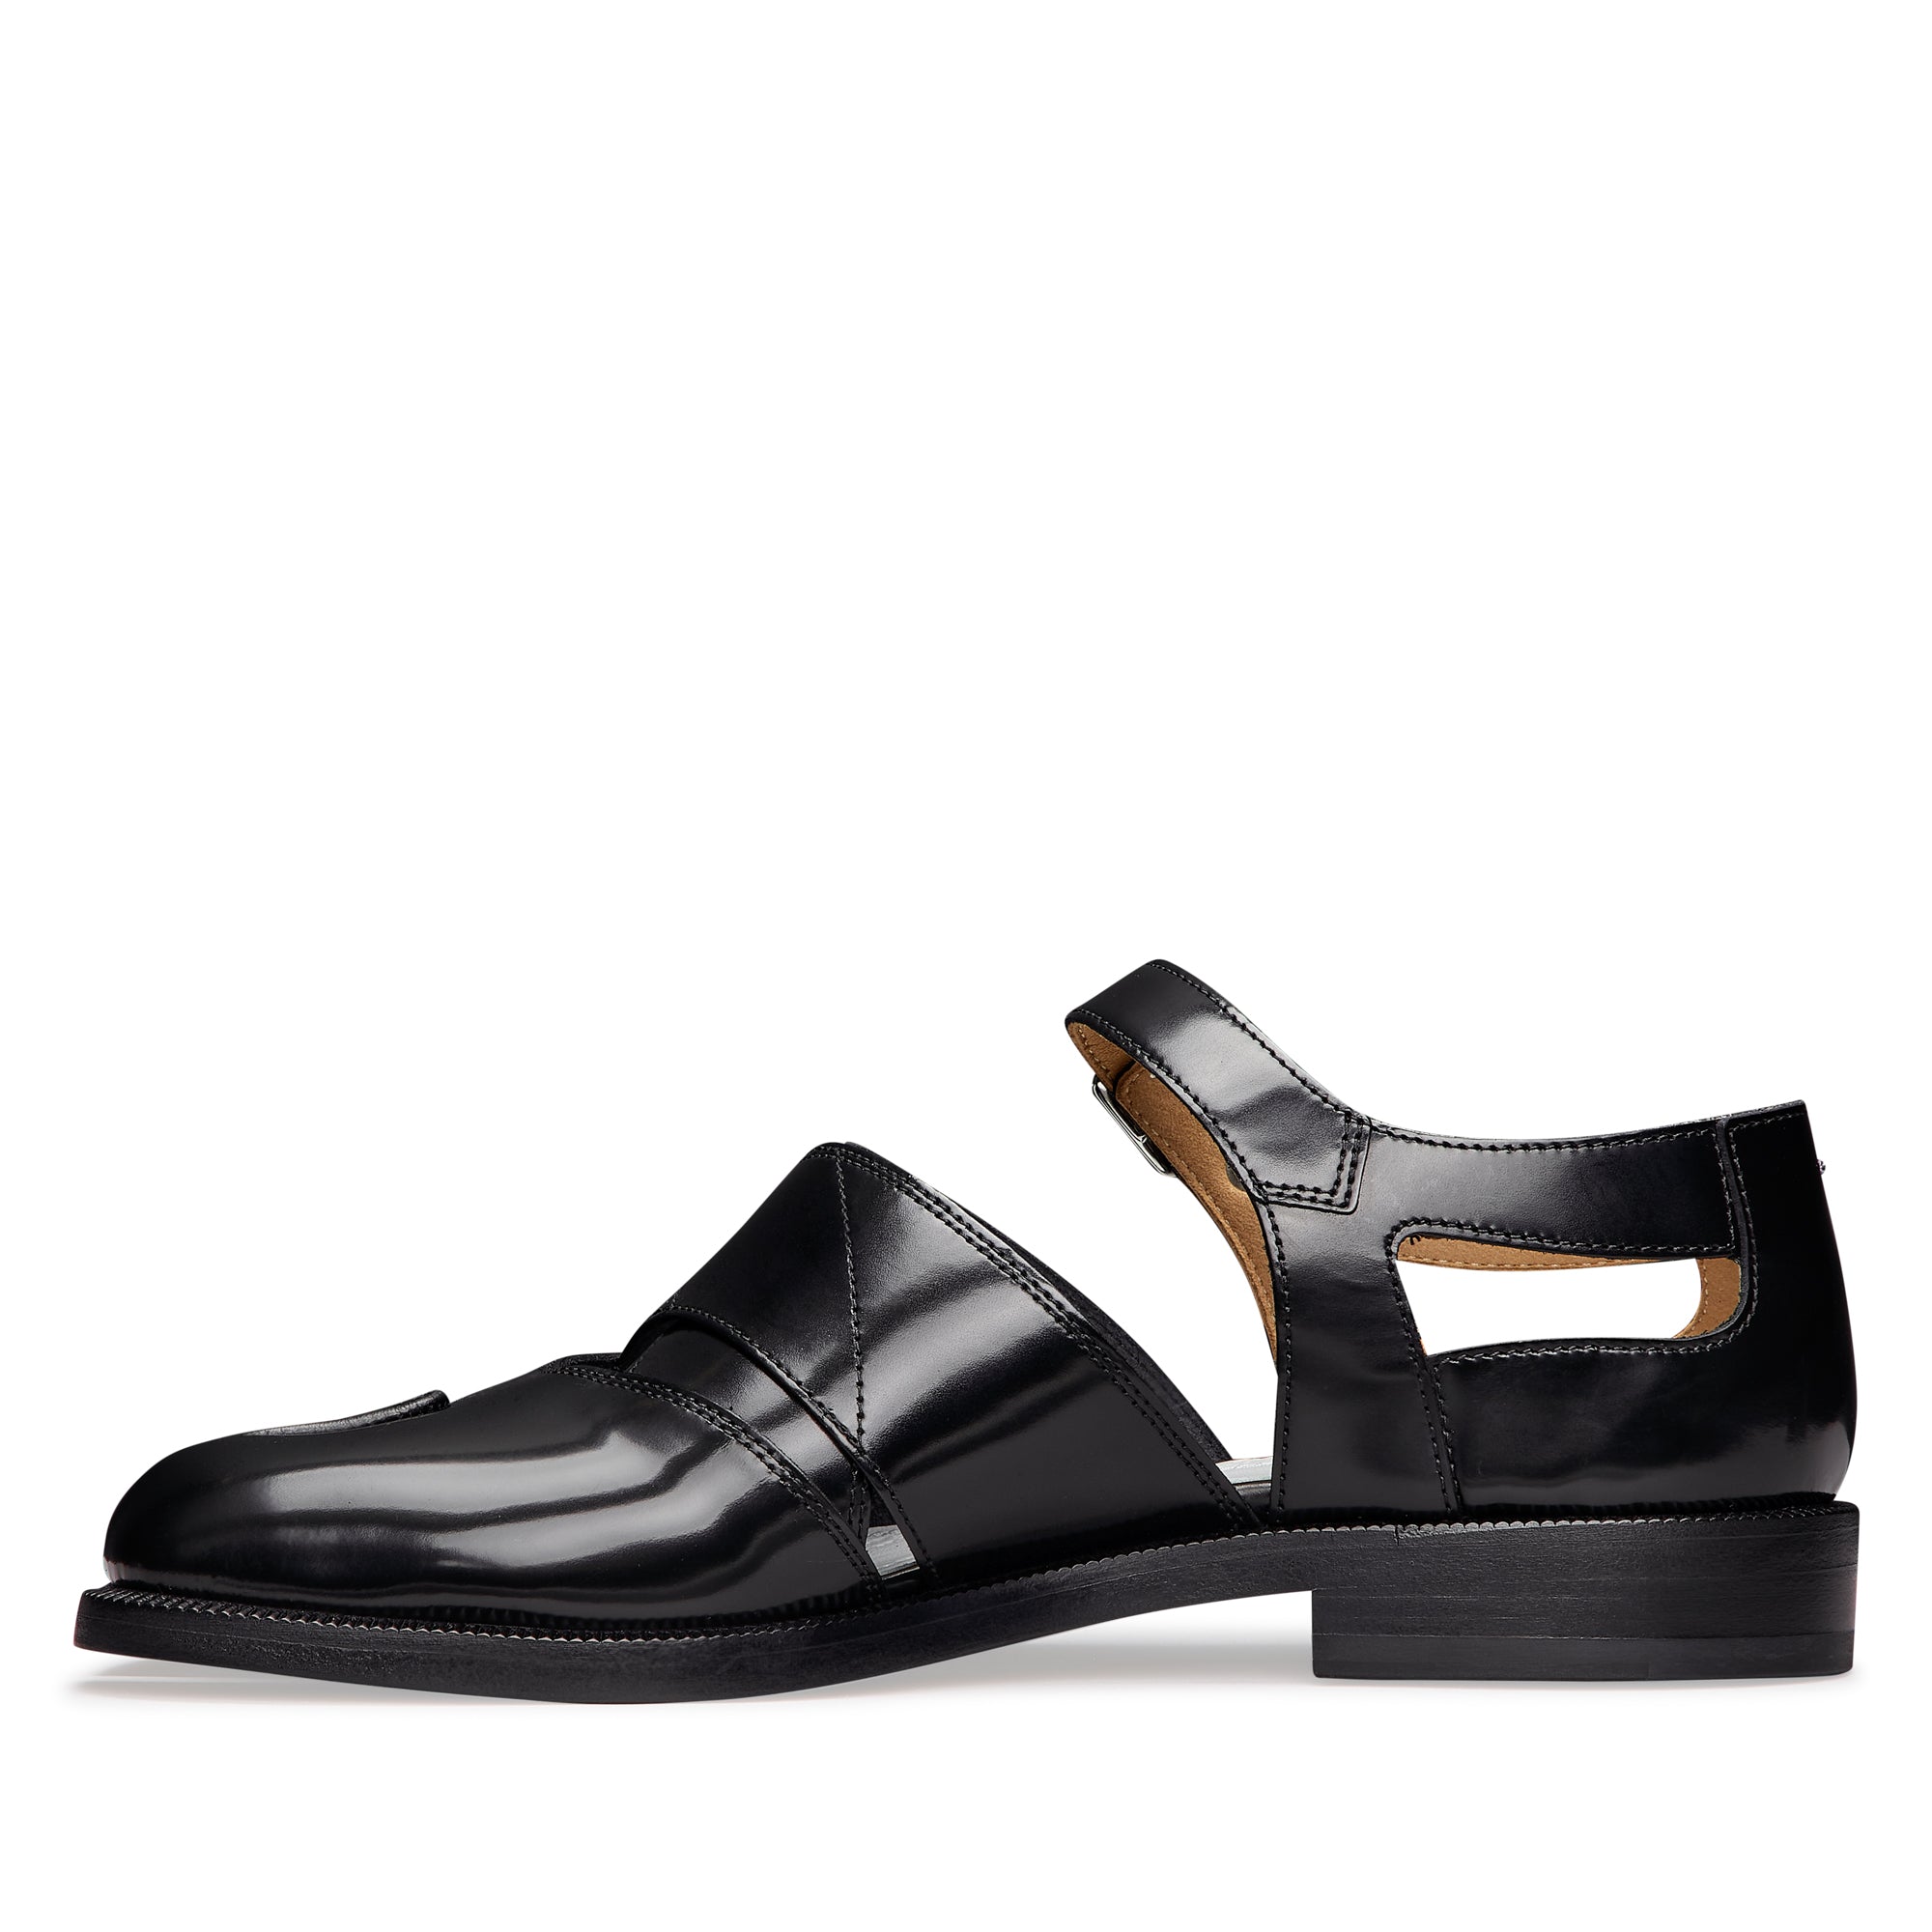 Martin Margiela - Women’s Tabi Leather Sandals - (Black)